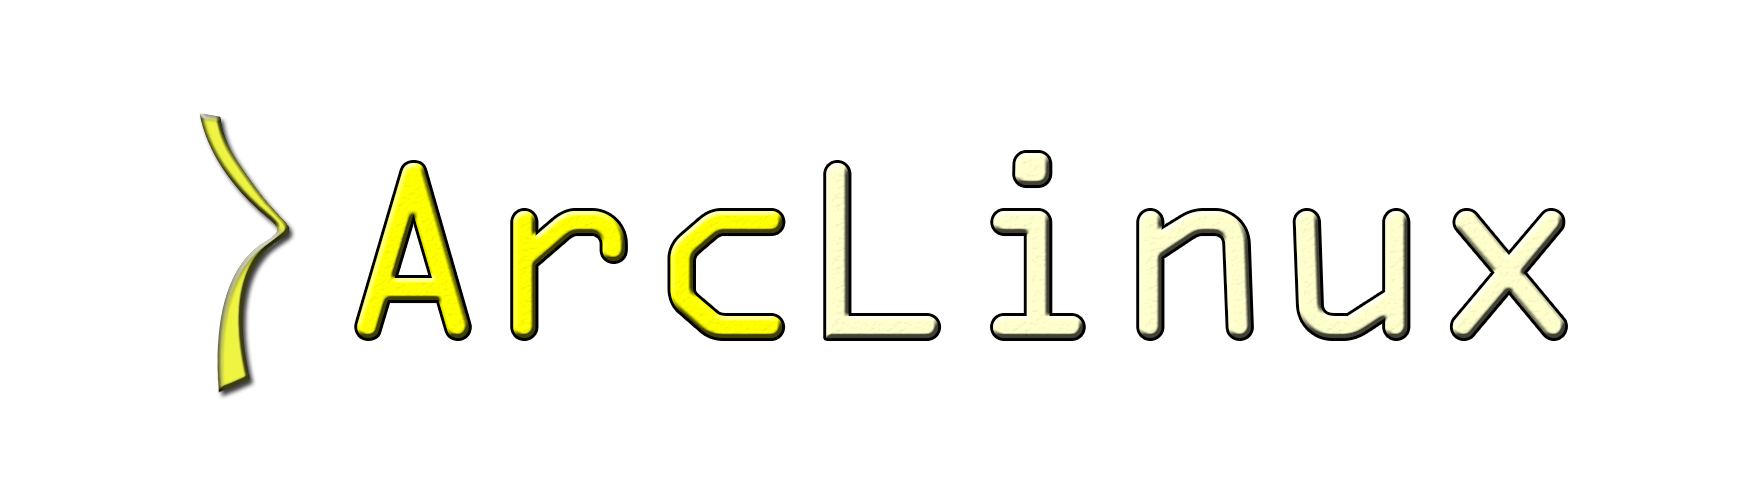 ArcLinux Logo